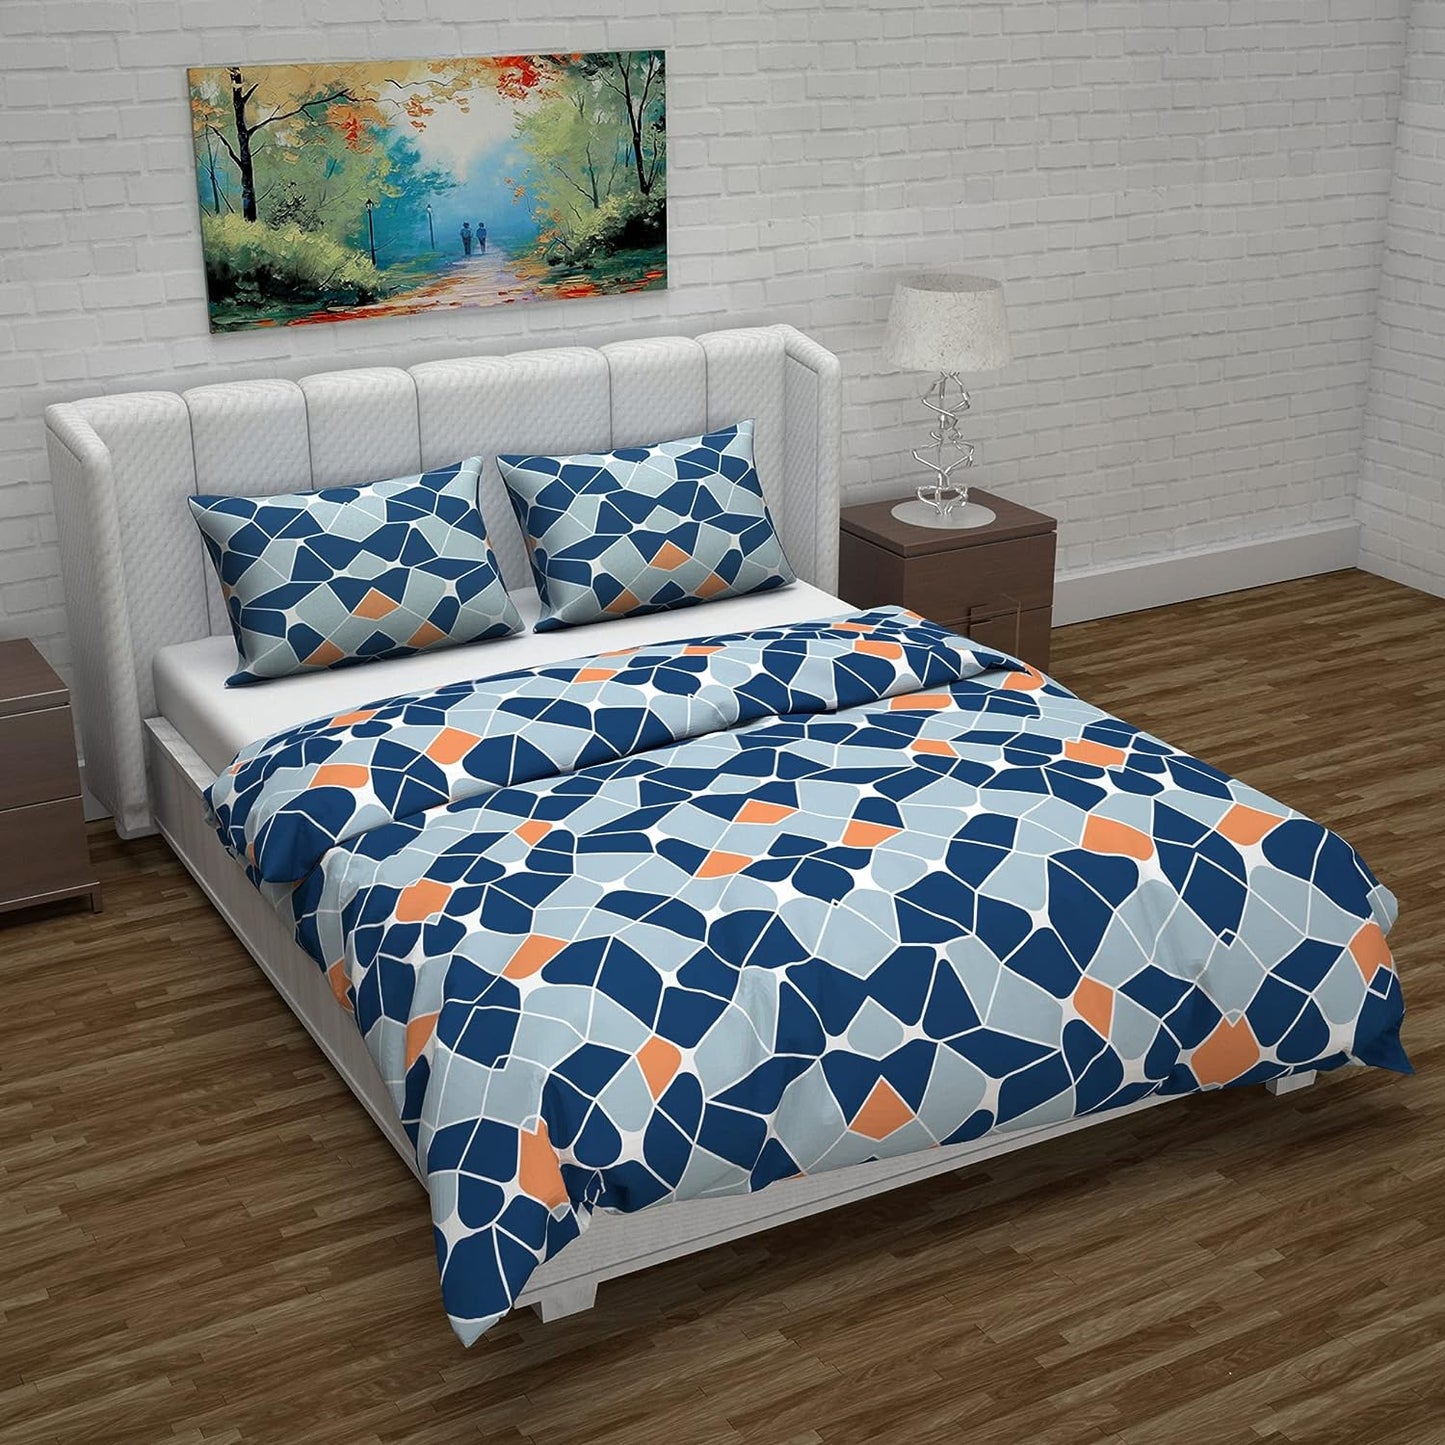 Microfiber Reversible Double Bed Queen Size Floral Printed Duvet Cover, Blue Orange